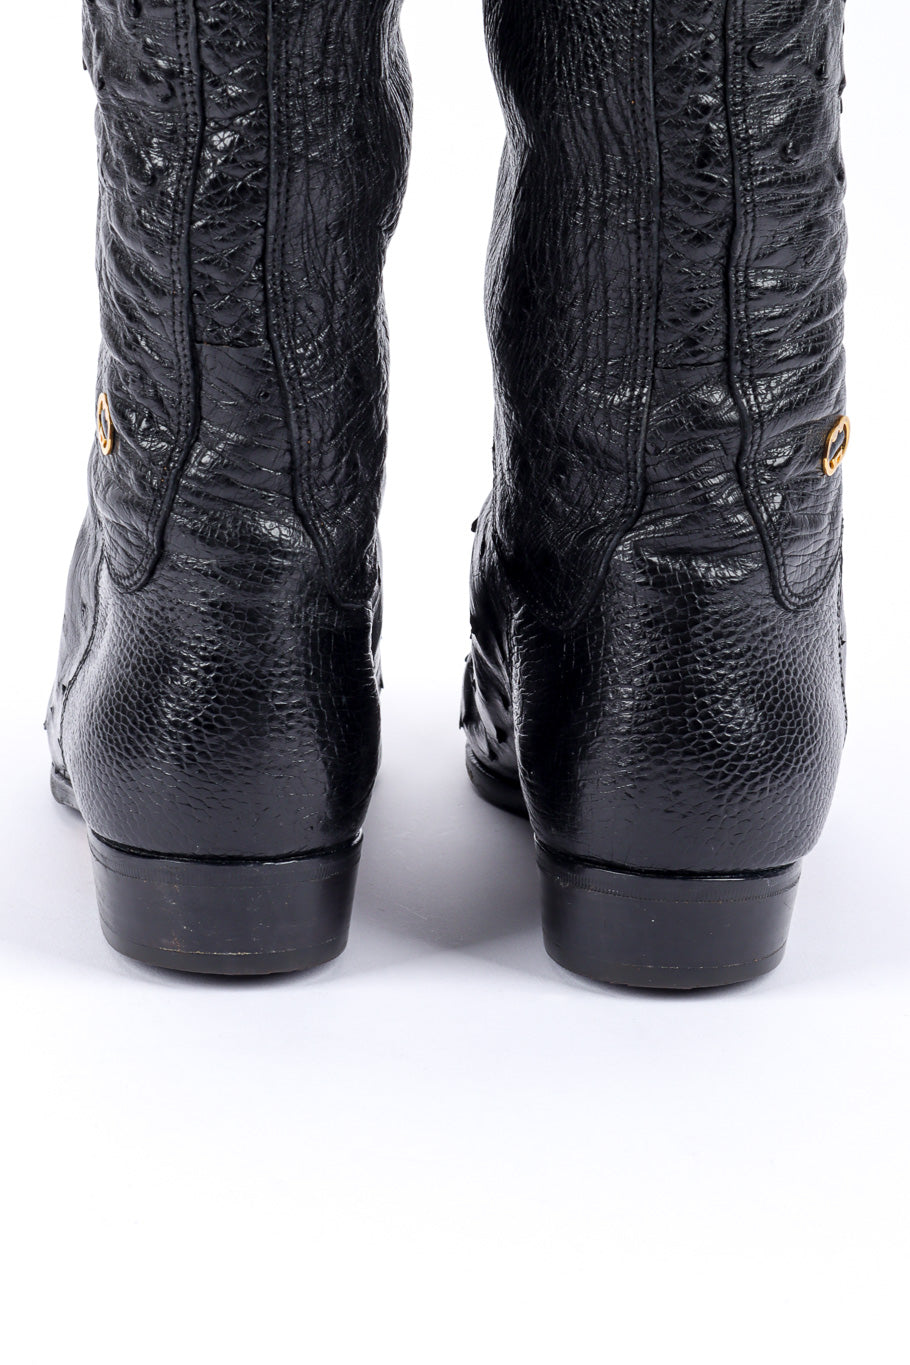 Vintage Gucci Black Ostrich Leather Riding Boot back heel closeup @recessla